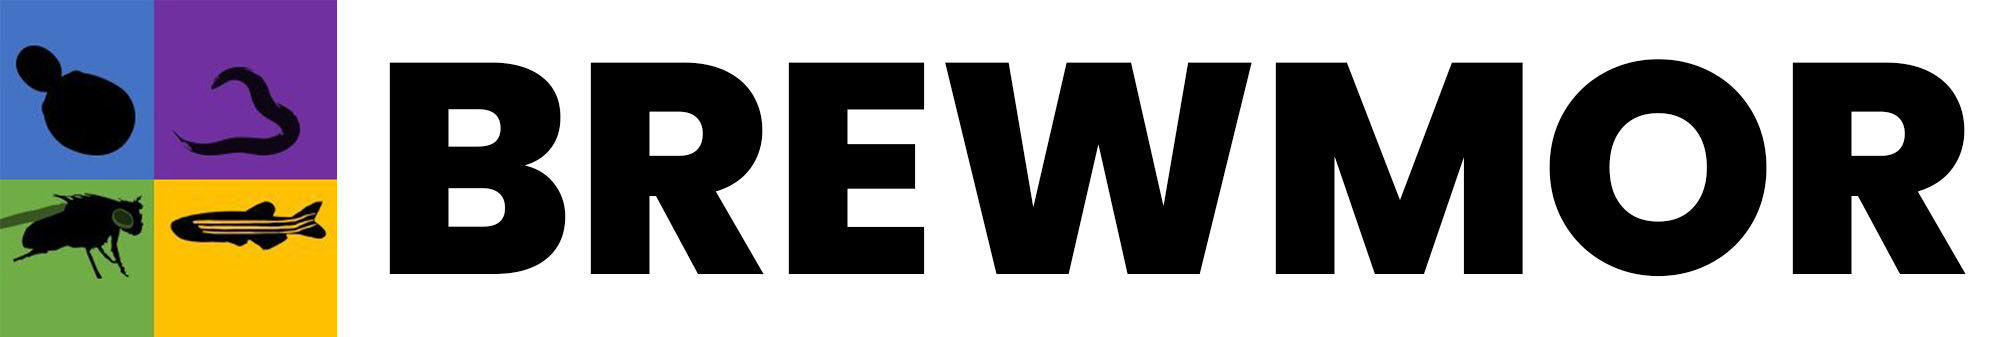 BREWMOR logo